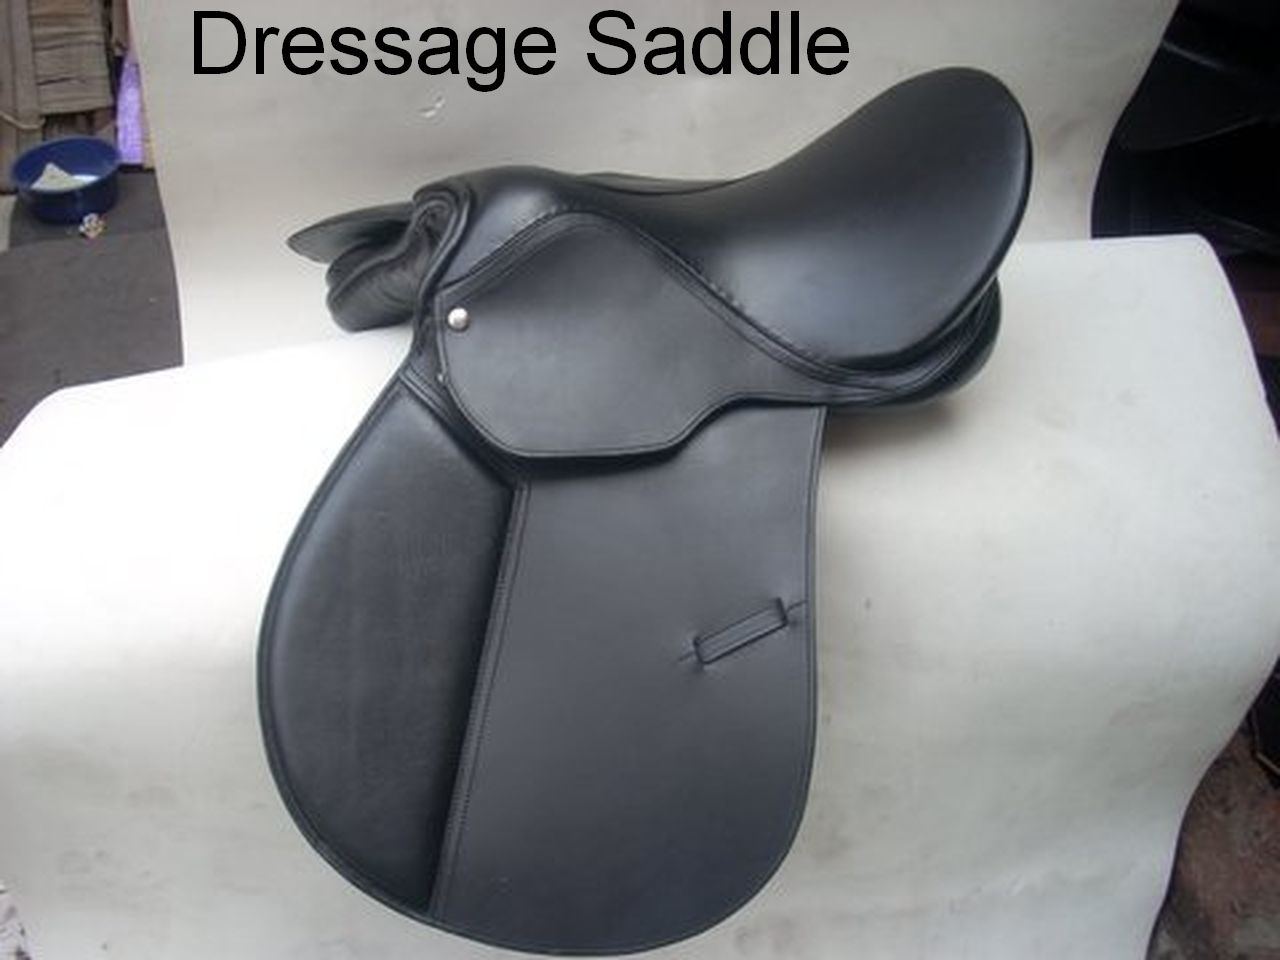 Dressage Saddle